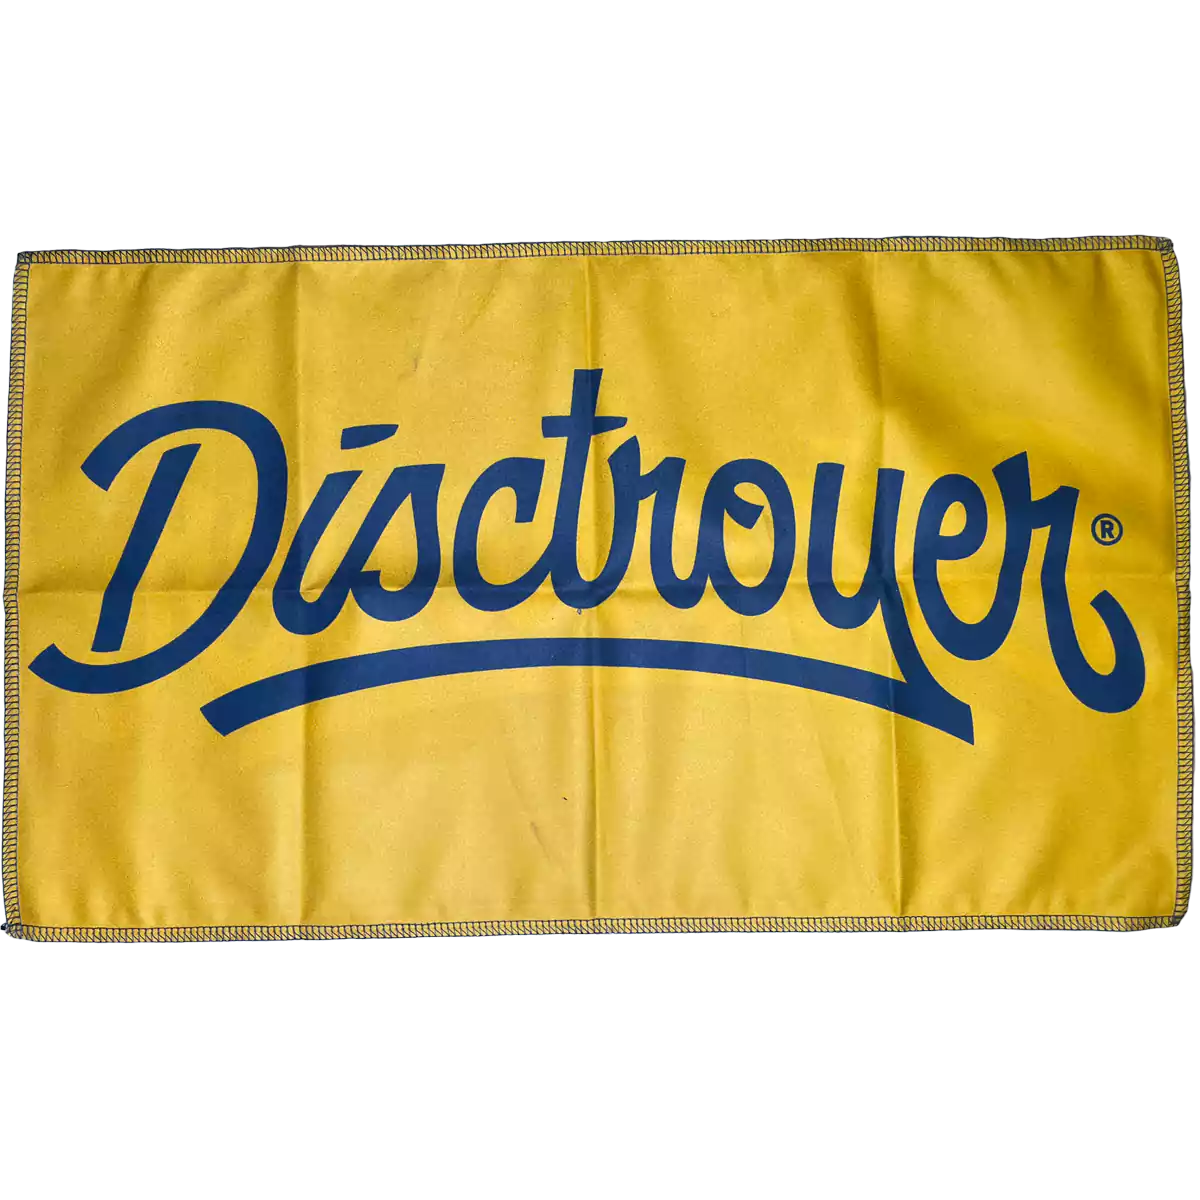 Towel-DisctroyerYellow_1800x1800